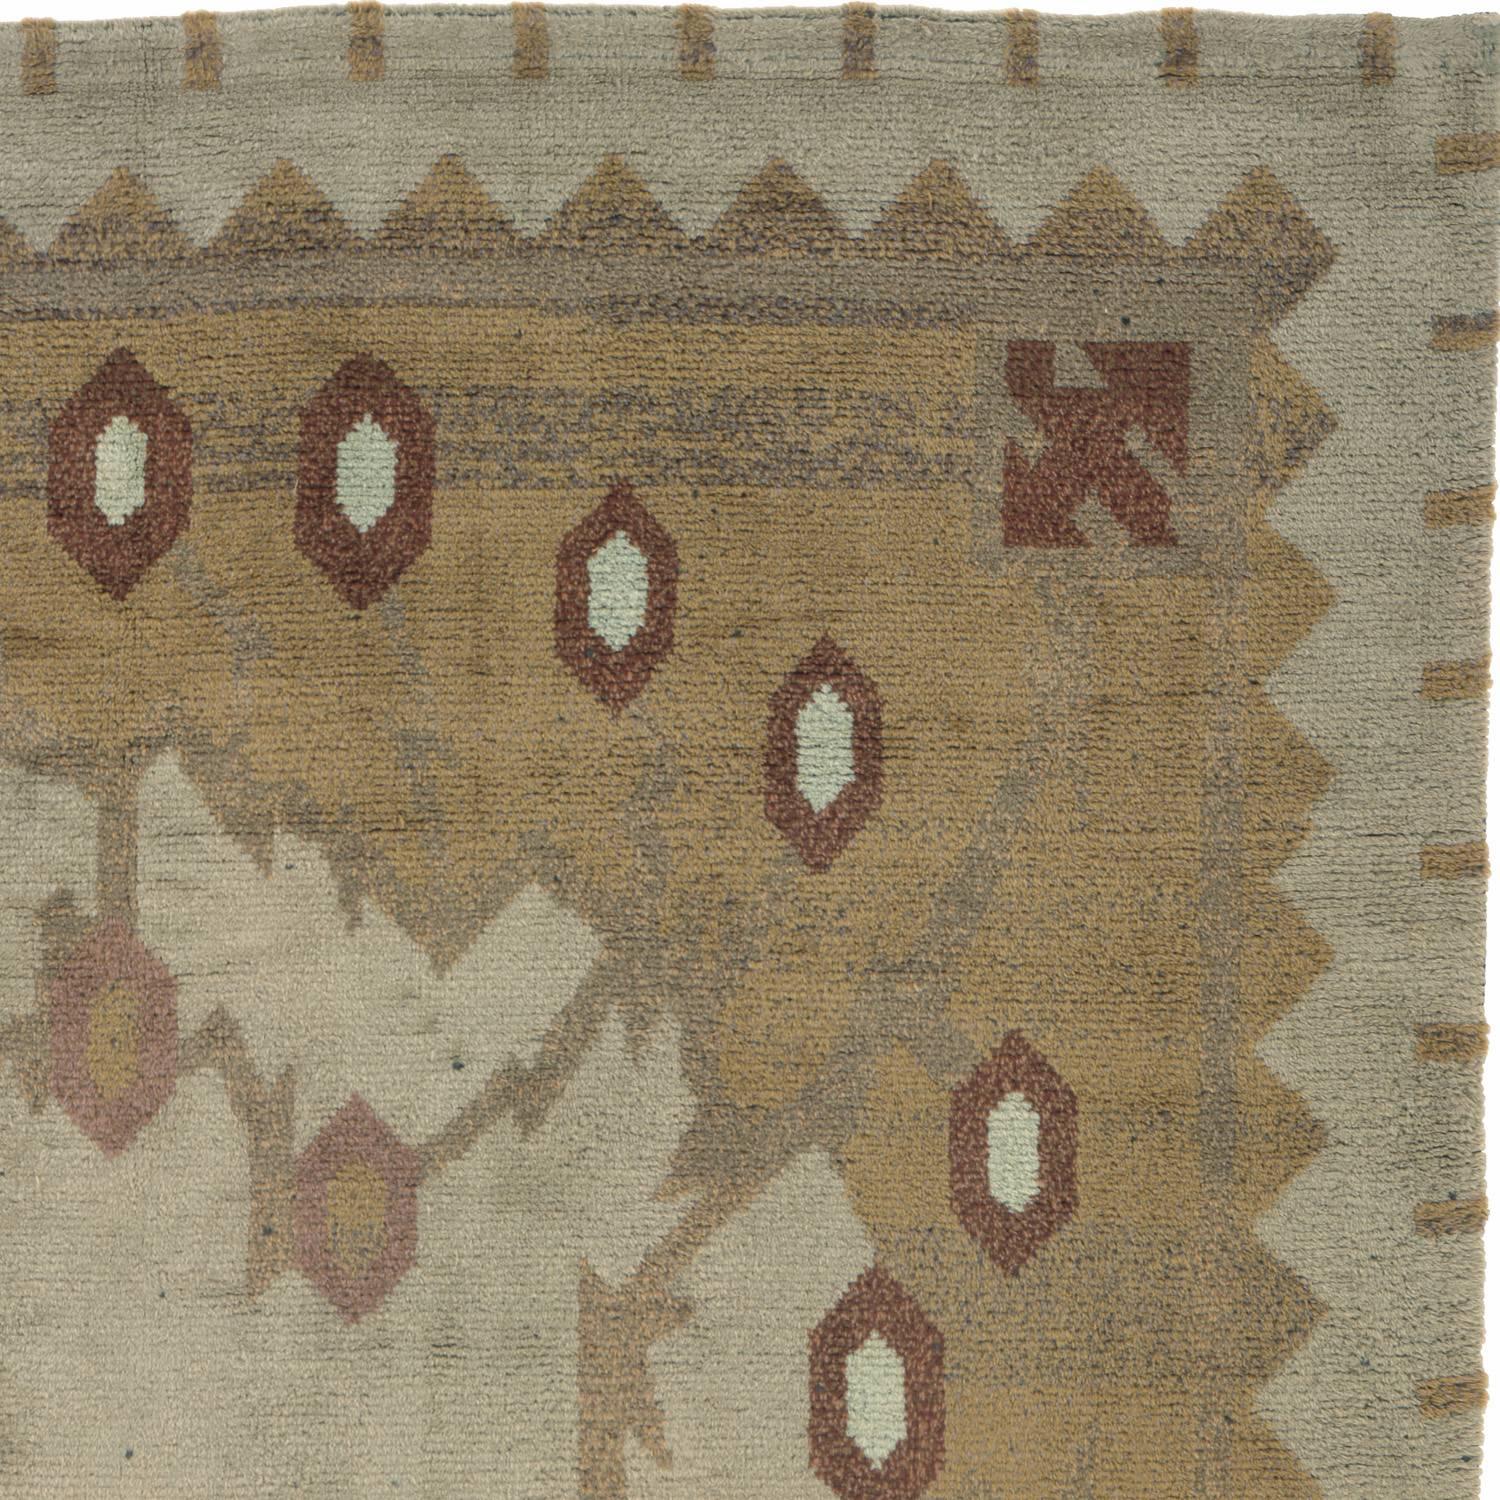 20th century Swedish pile-weave carpet by Eva Brummer.
Handwoven
Sweden ca. 1930